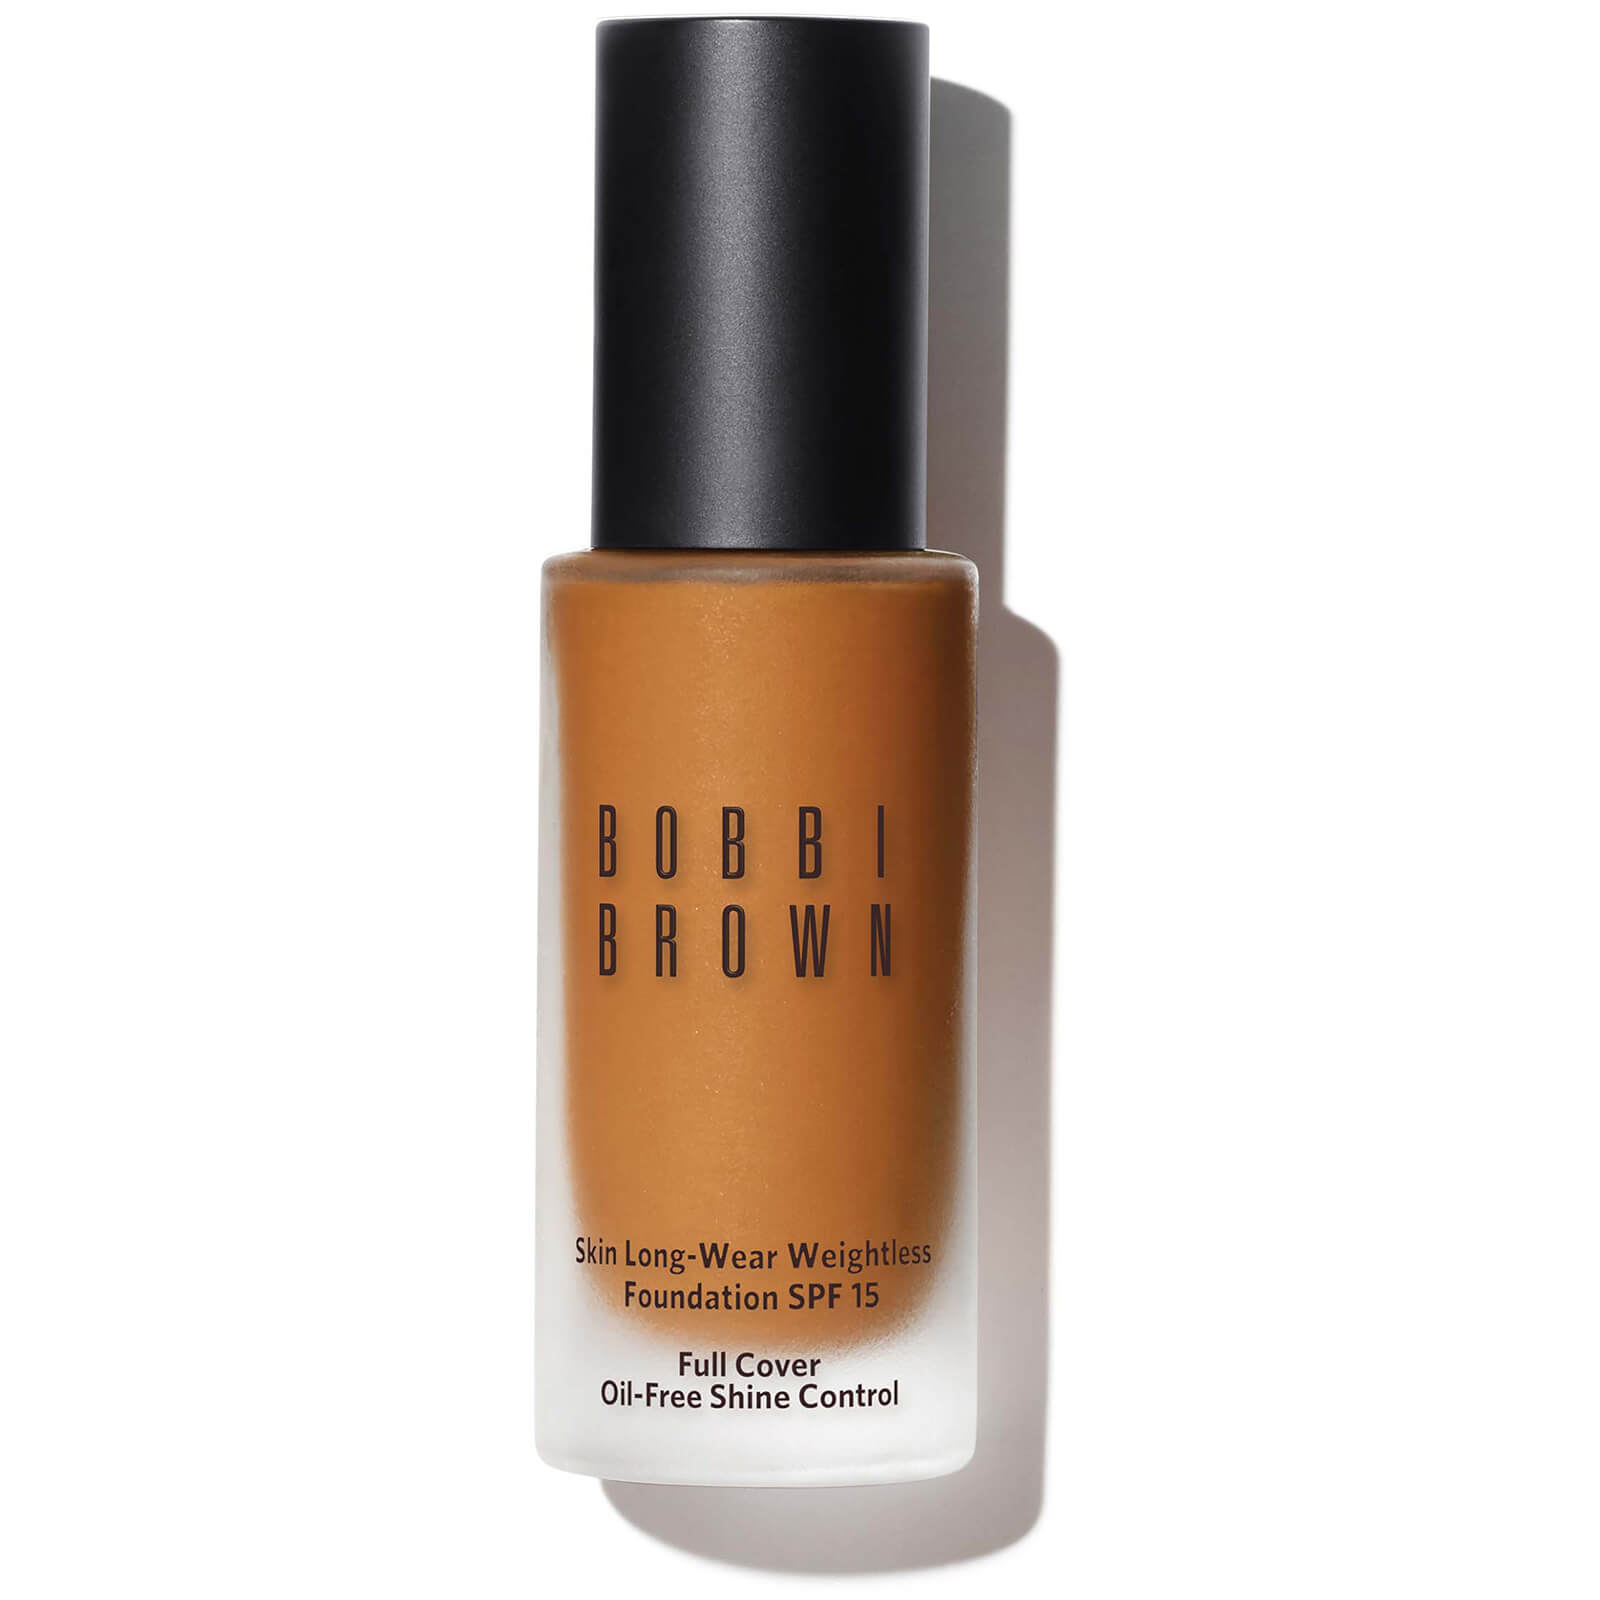 Bobbi Brown Skin Long-Wear Weightless Foundation SPF15 (Various Shades) - Neutral Golden